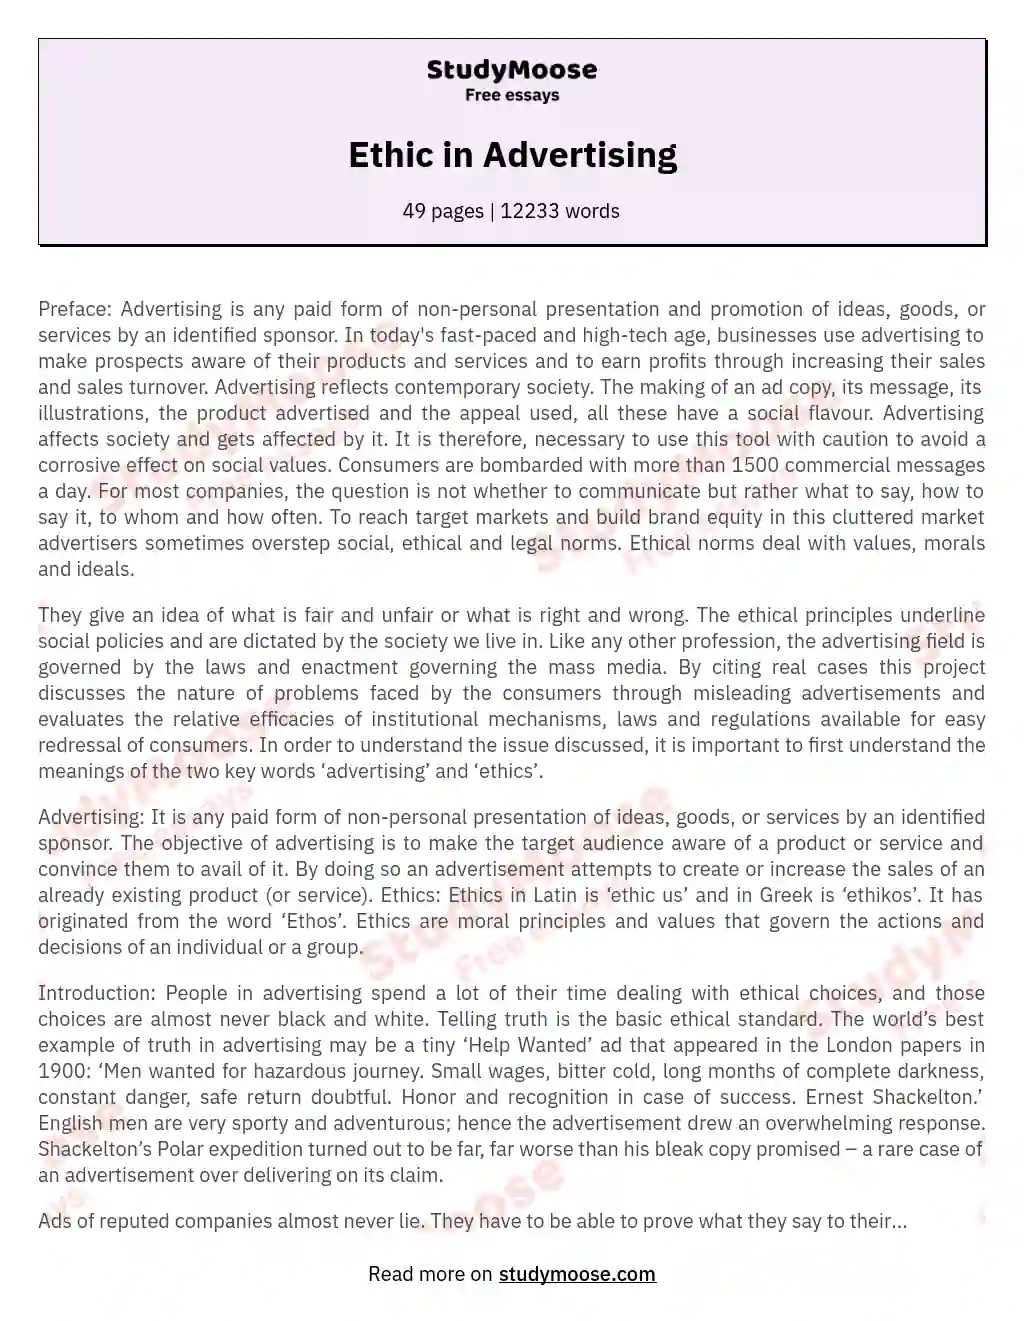 Ethic in Advertising essay